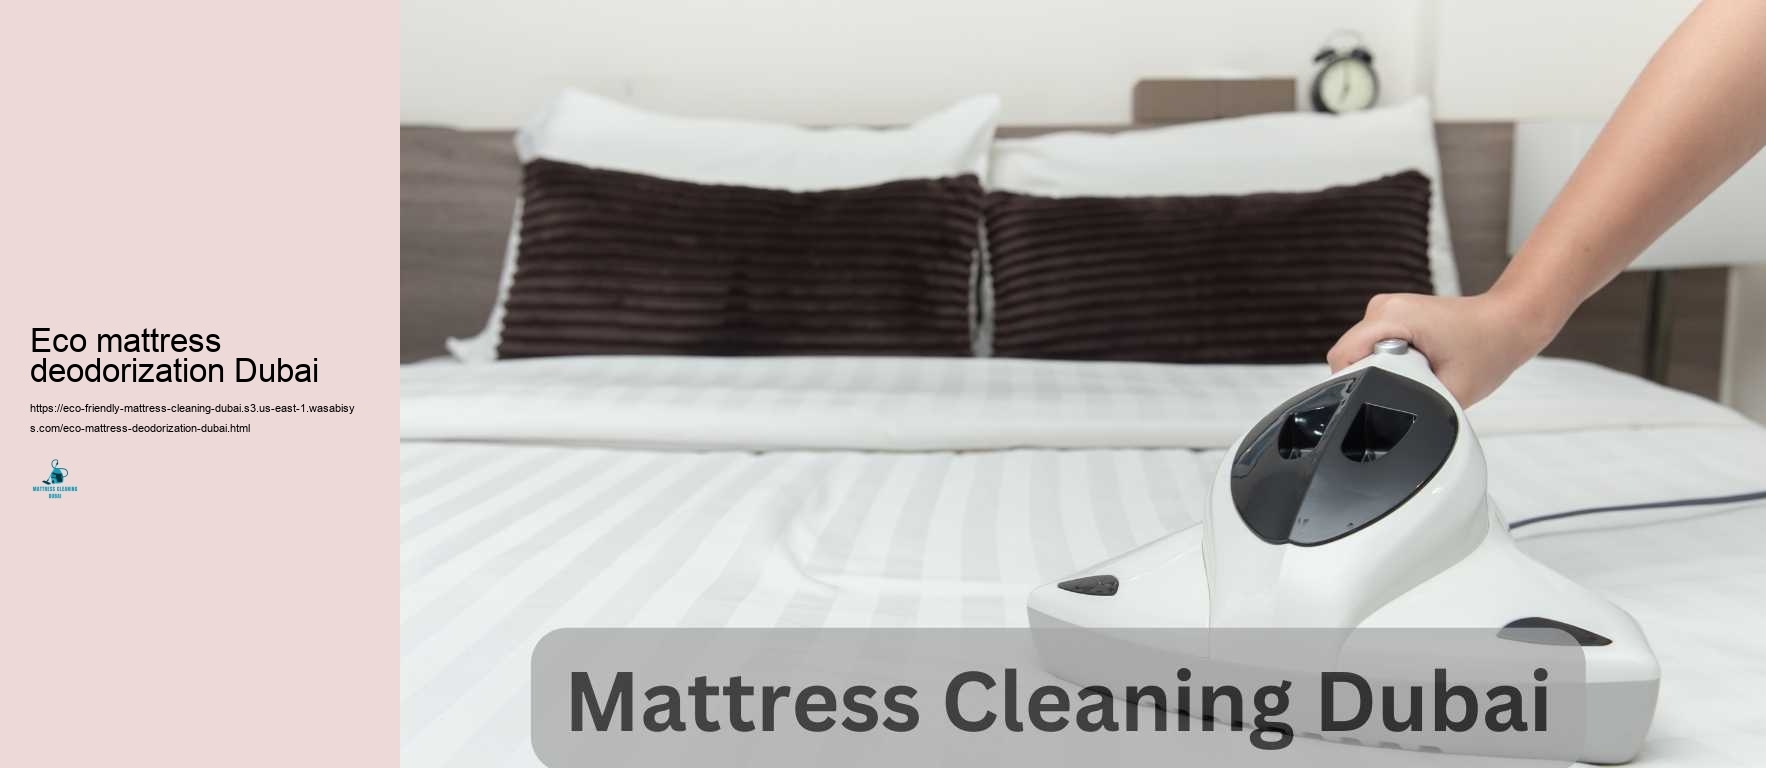 Eco mattress deodorization Dubai